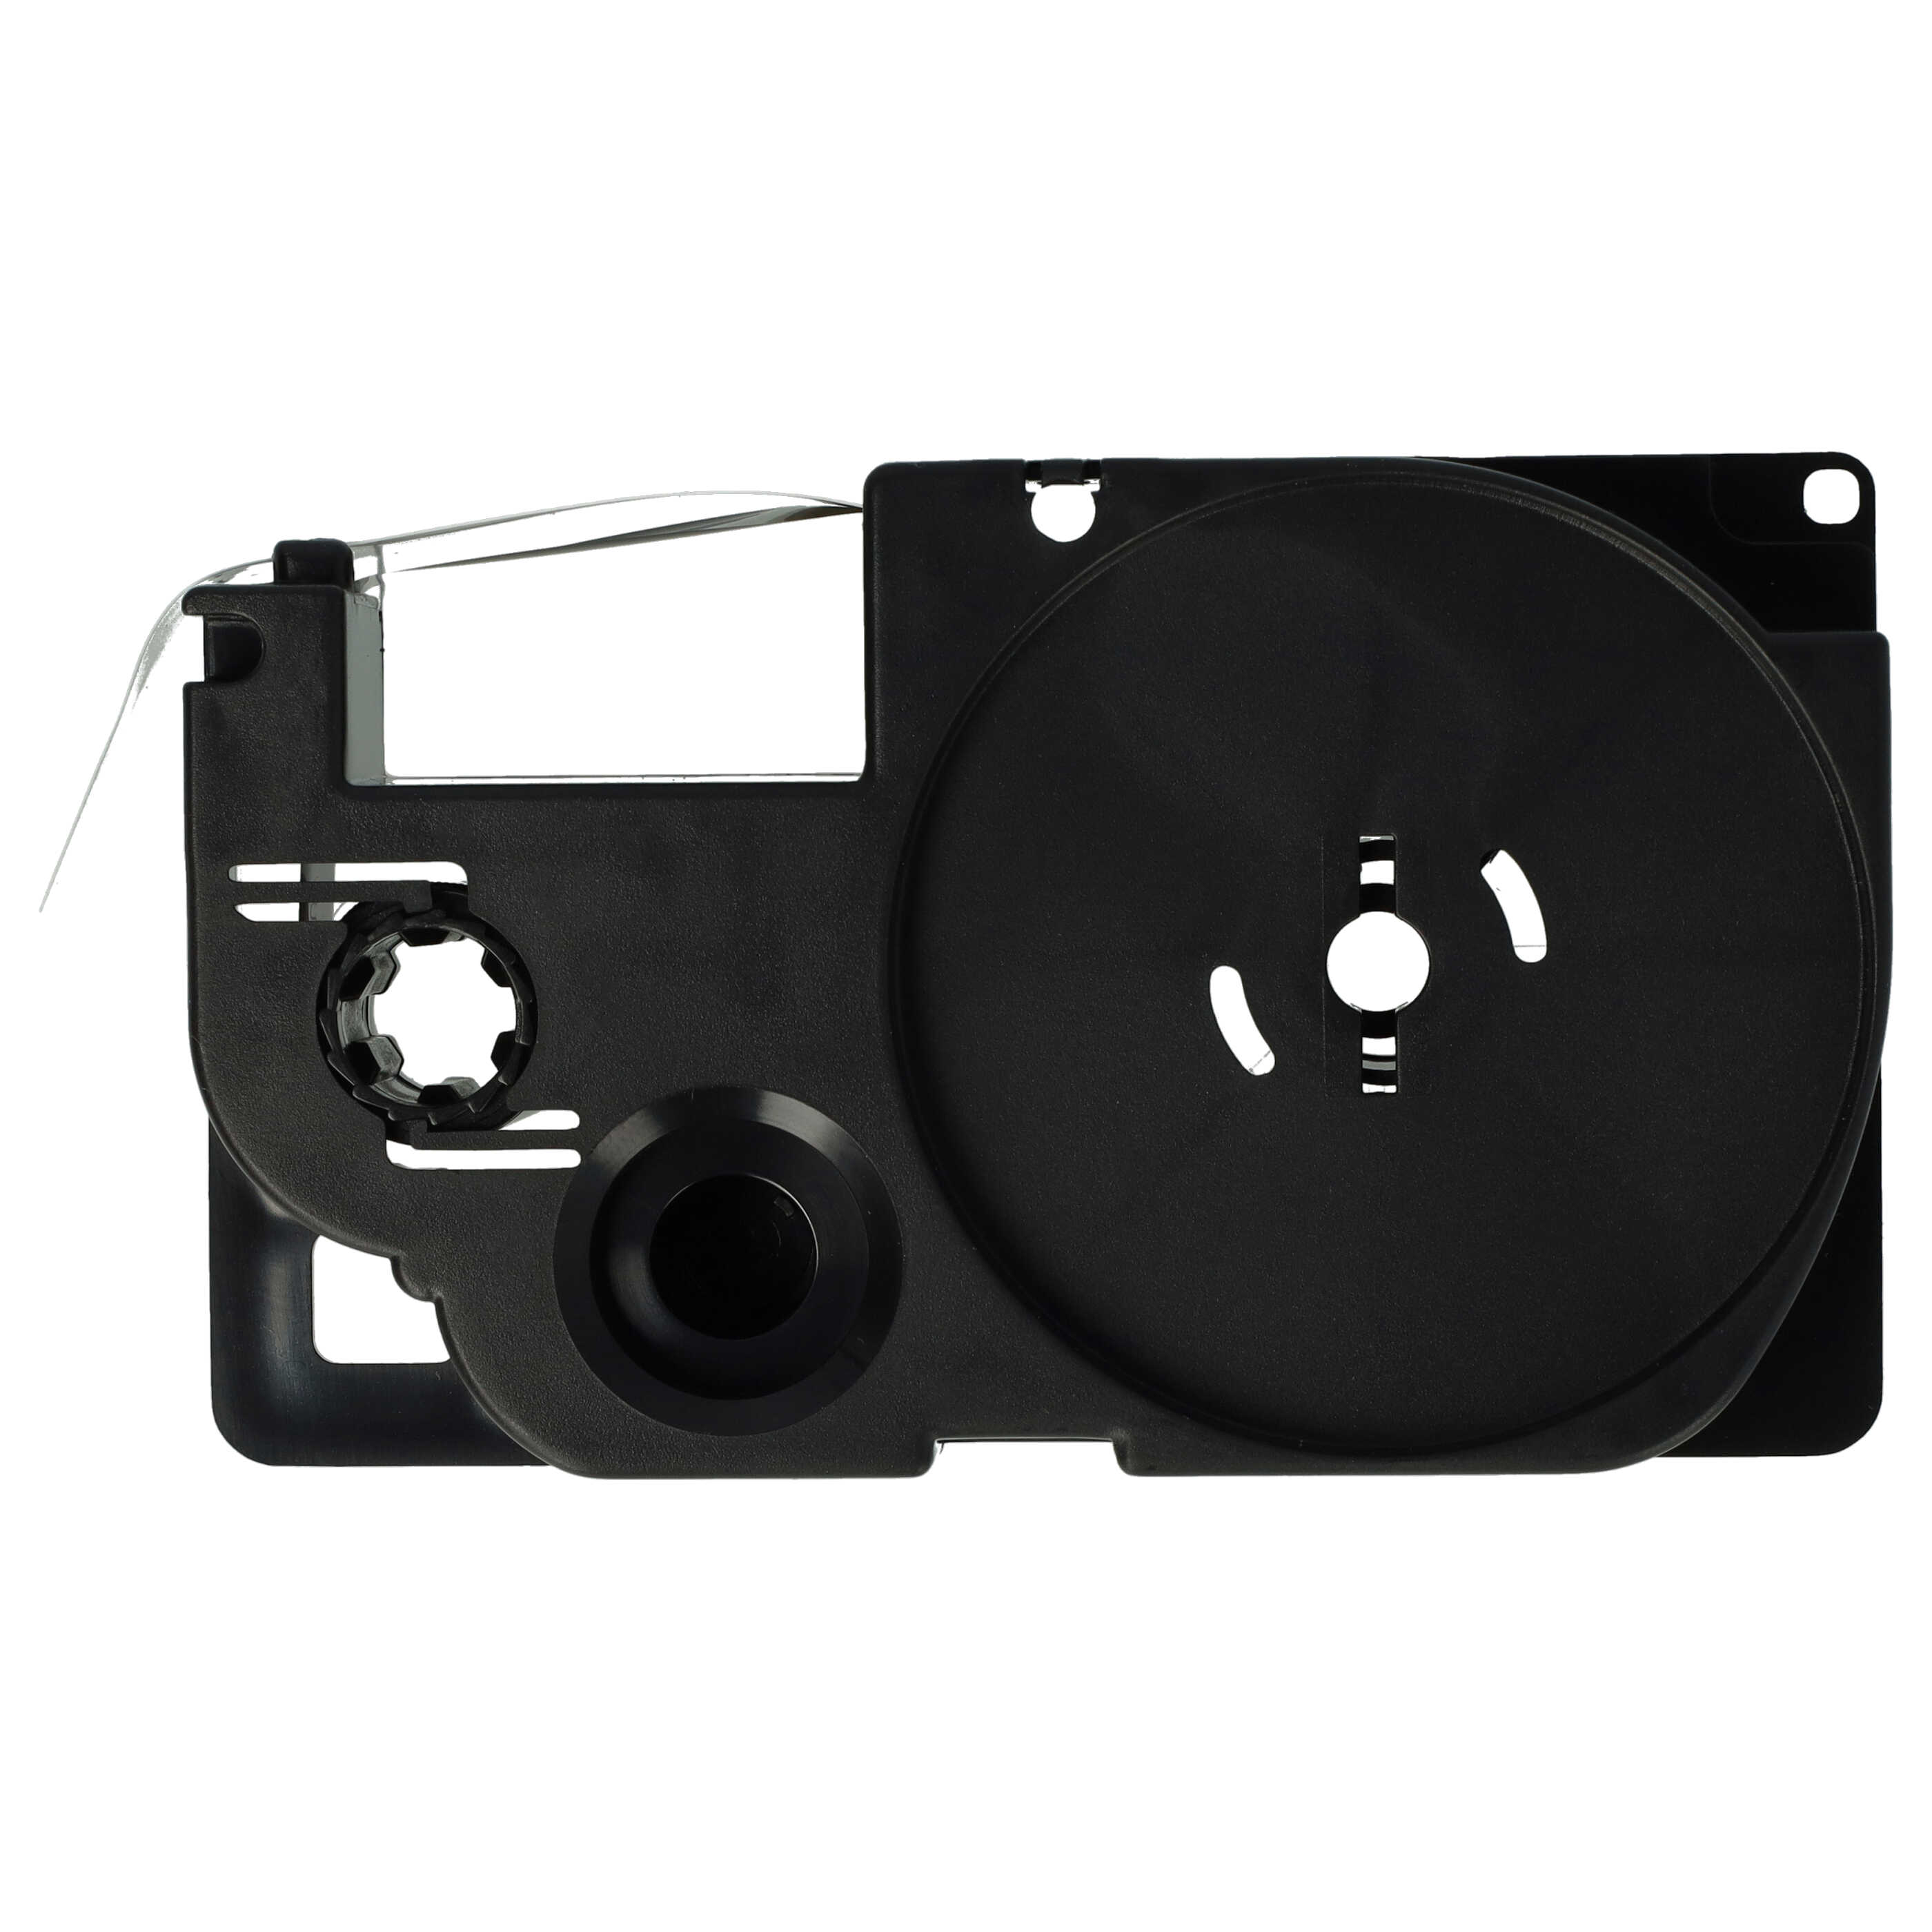 3x Cassetta nastro sostituisce Casio XR-12WE, XR-12WE1 per etichettatrice Casio 12mm nero su bianco